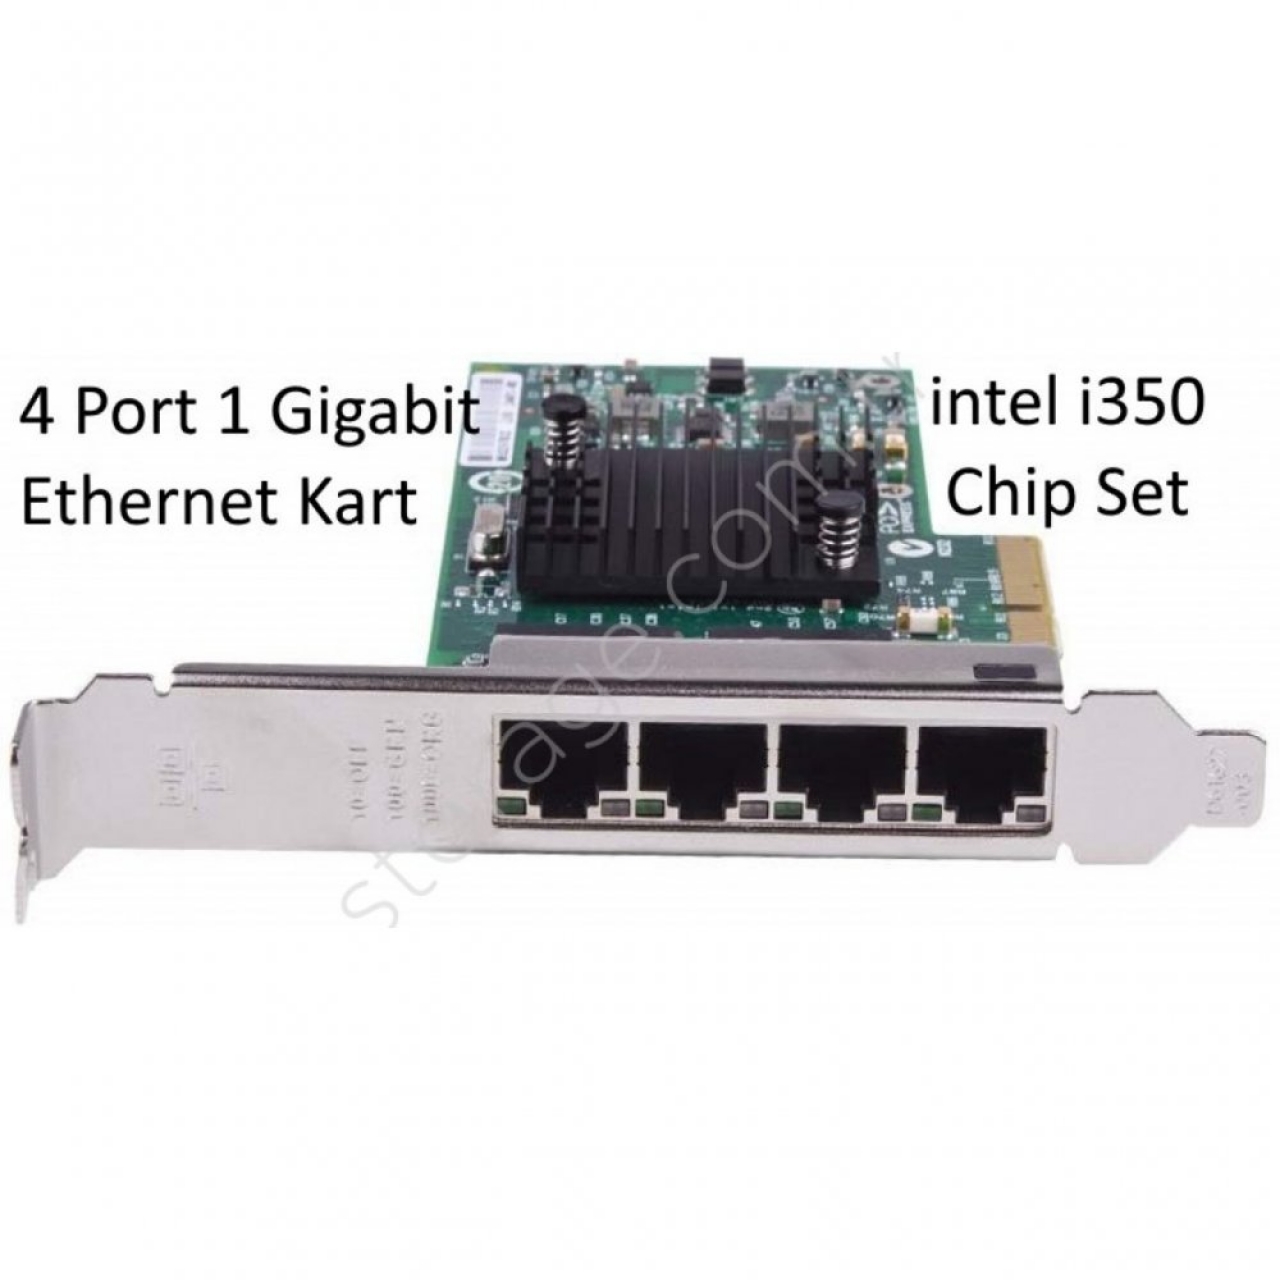 4 port 1 Gigabit Ethernet Kart RJ-45 Intel i350-T4